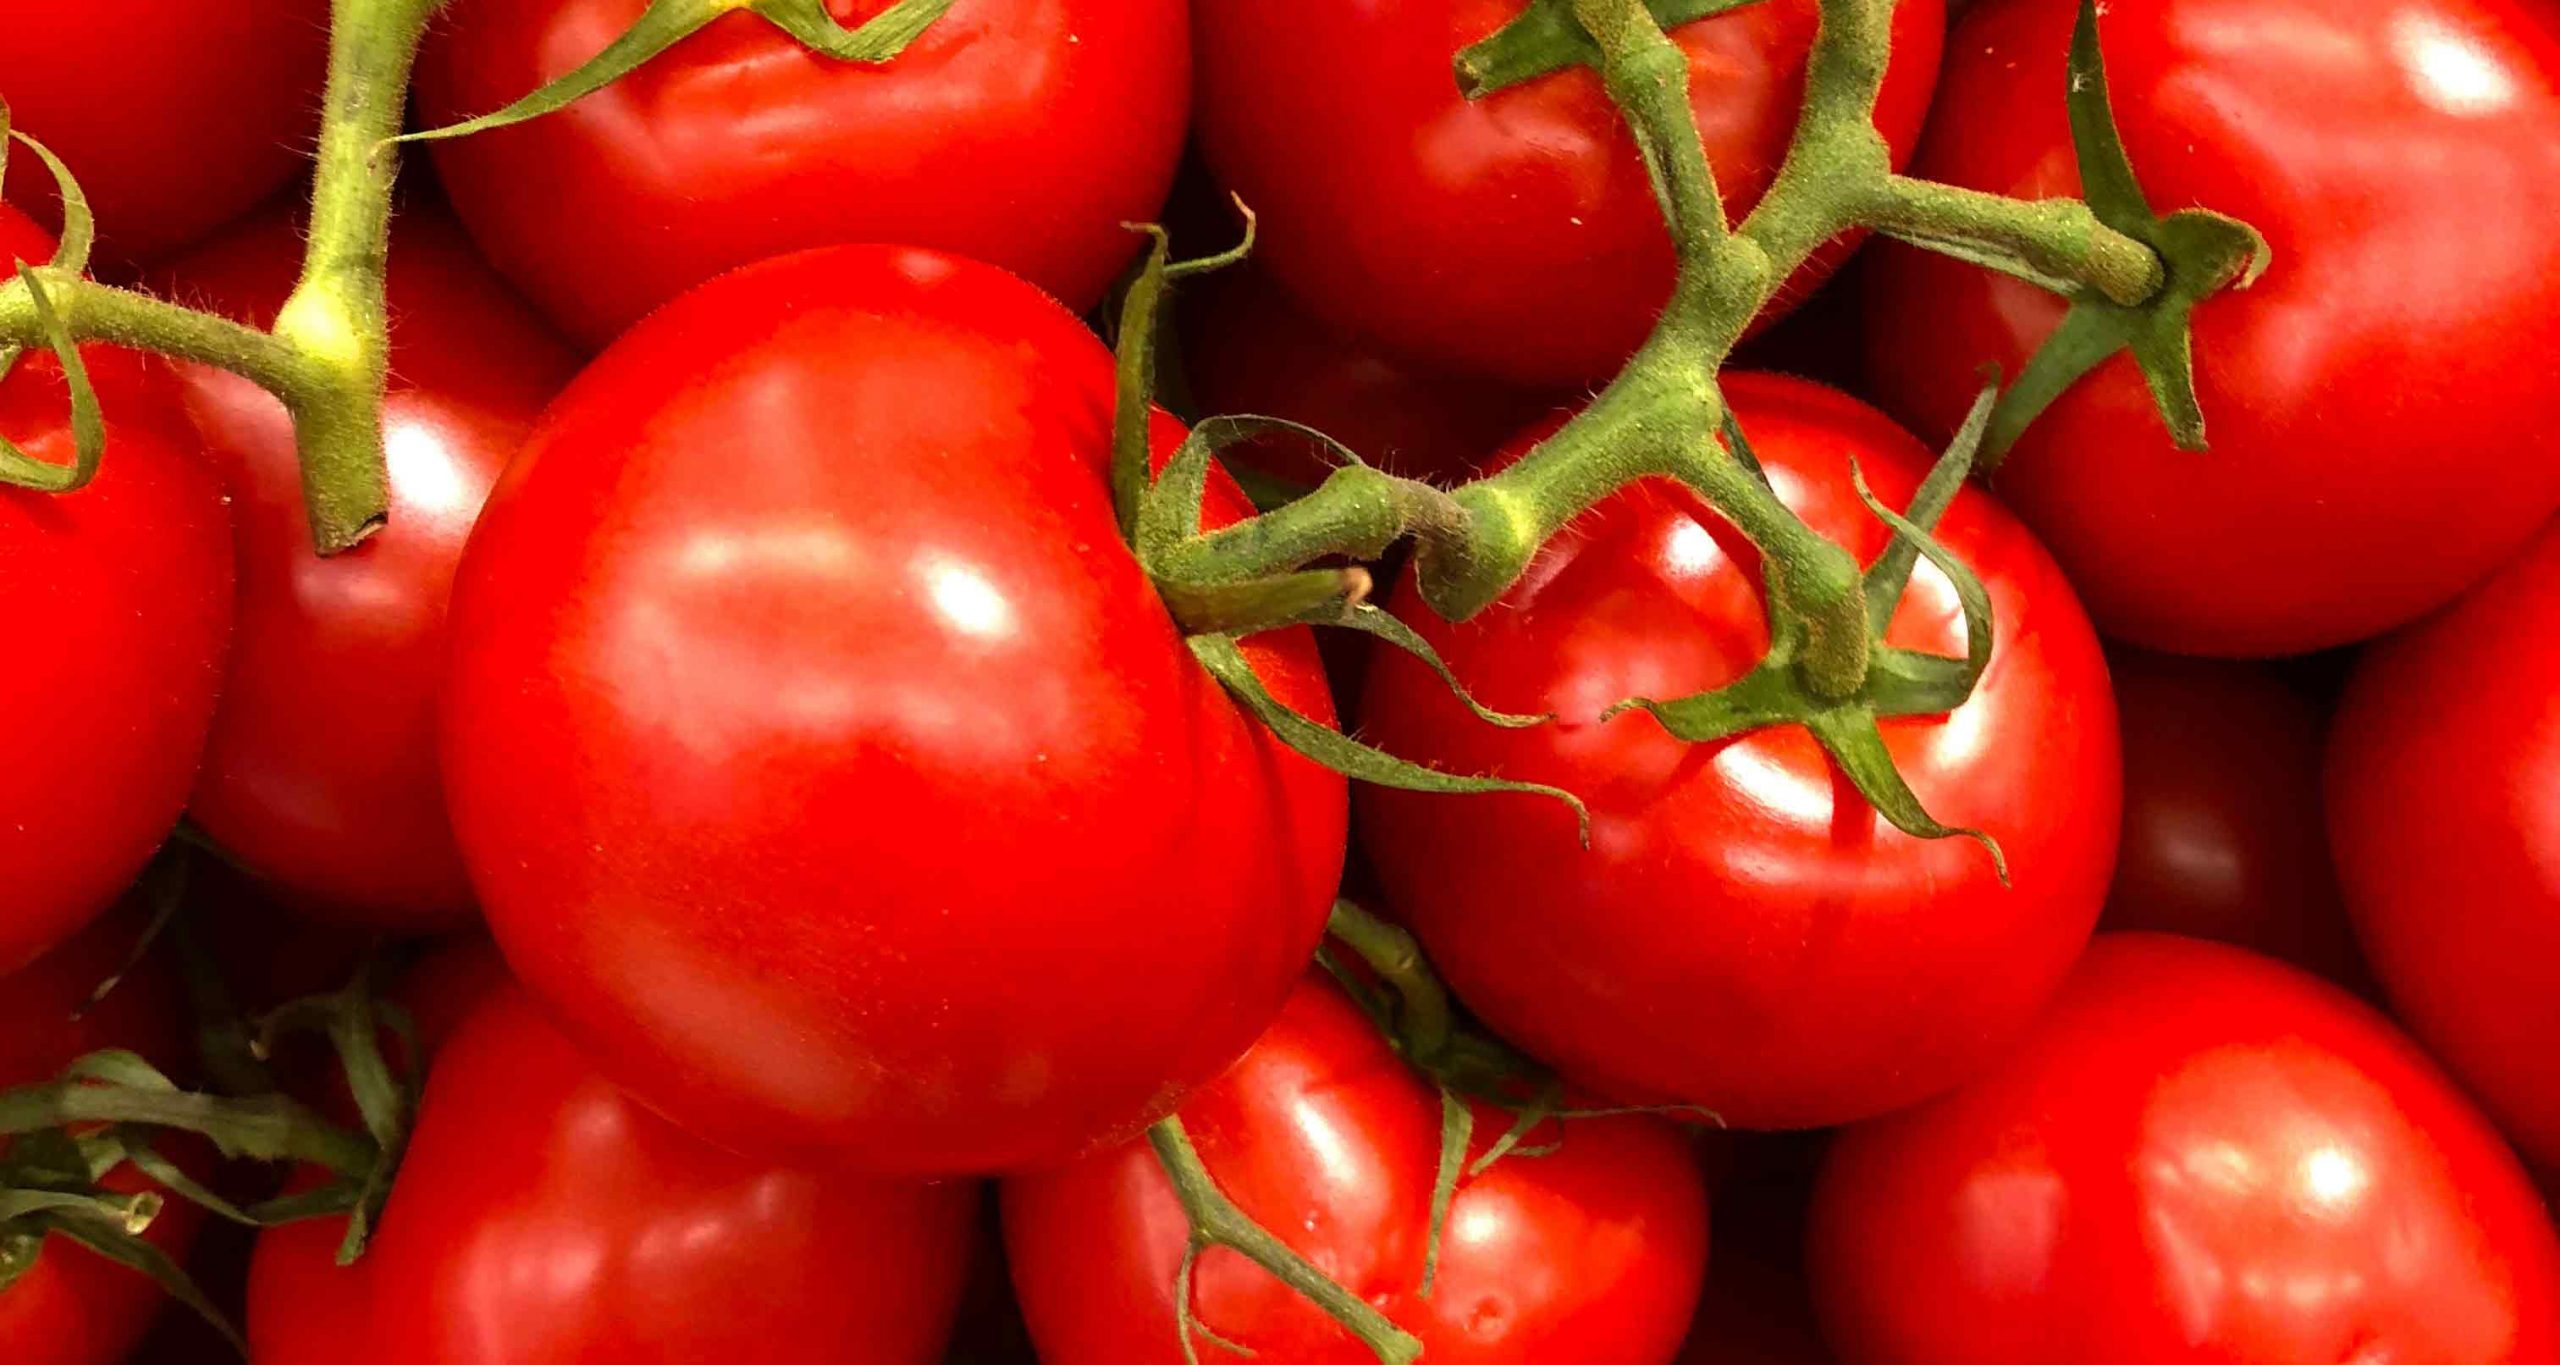 Comparing resource tomato production